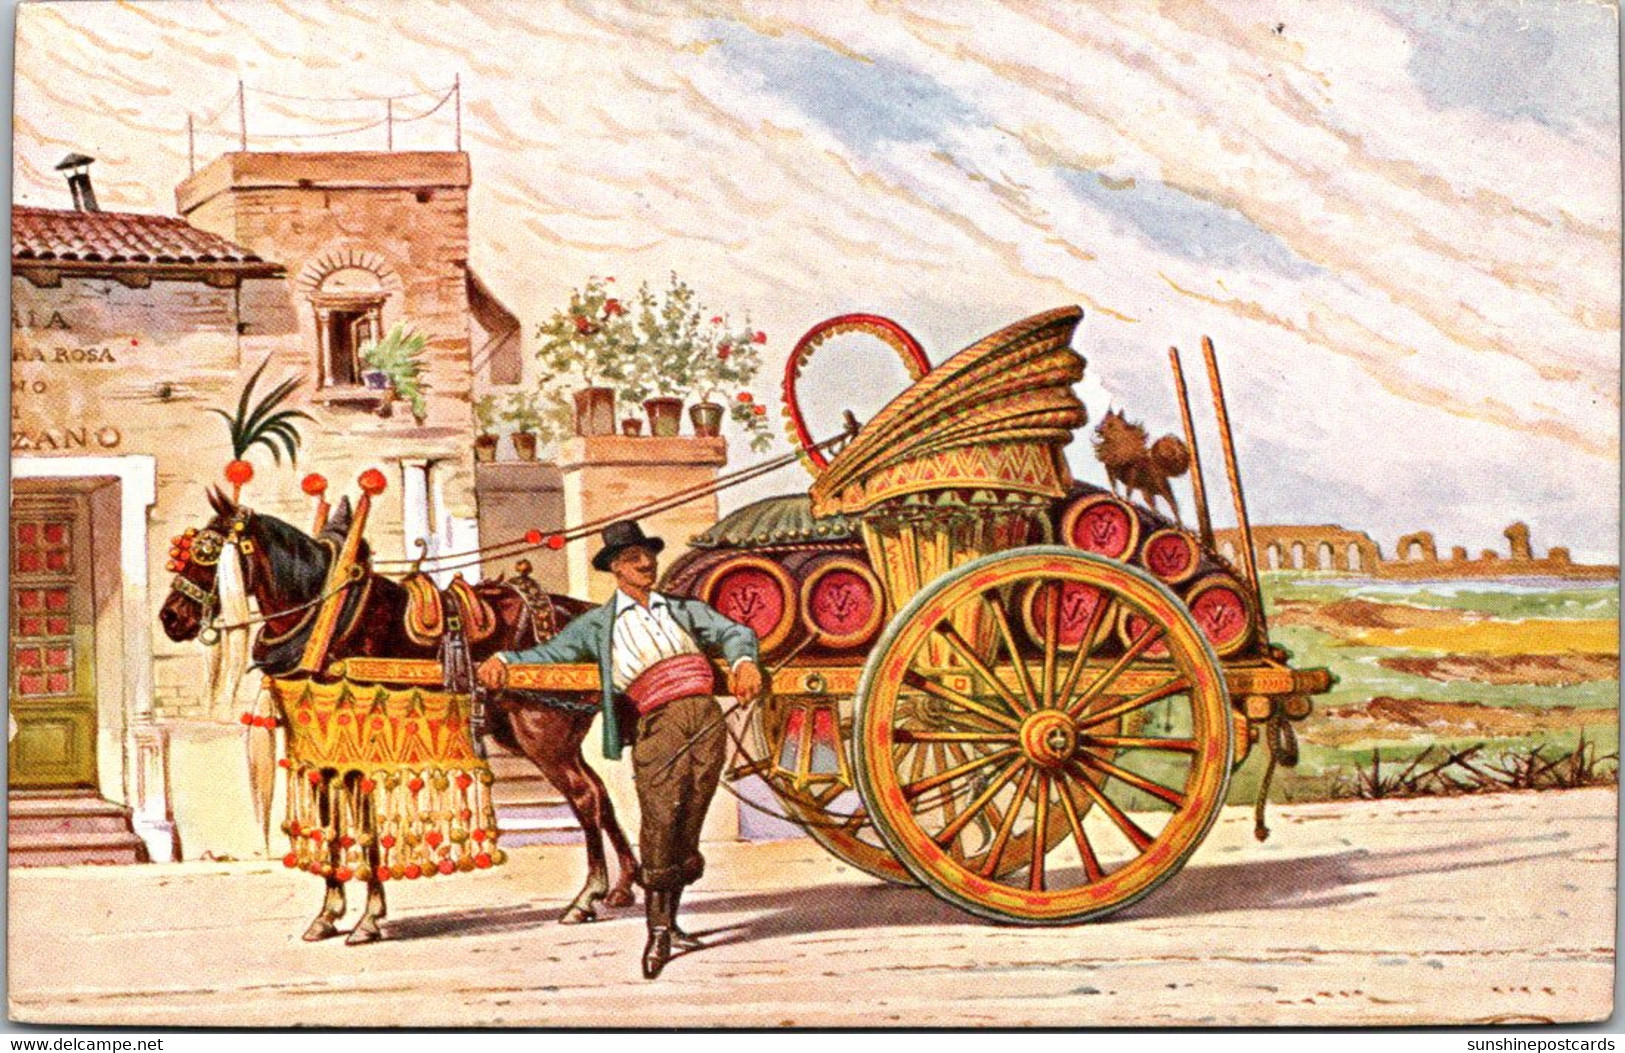 Italy Roma Rome Carrettiere A Vino Wine Vendor And Horse Drawn Cart - Transportmiddelen